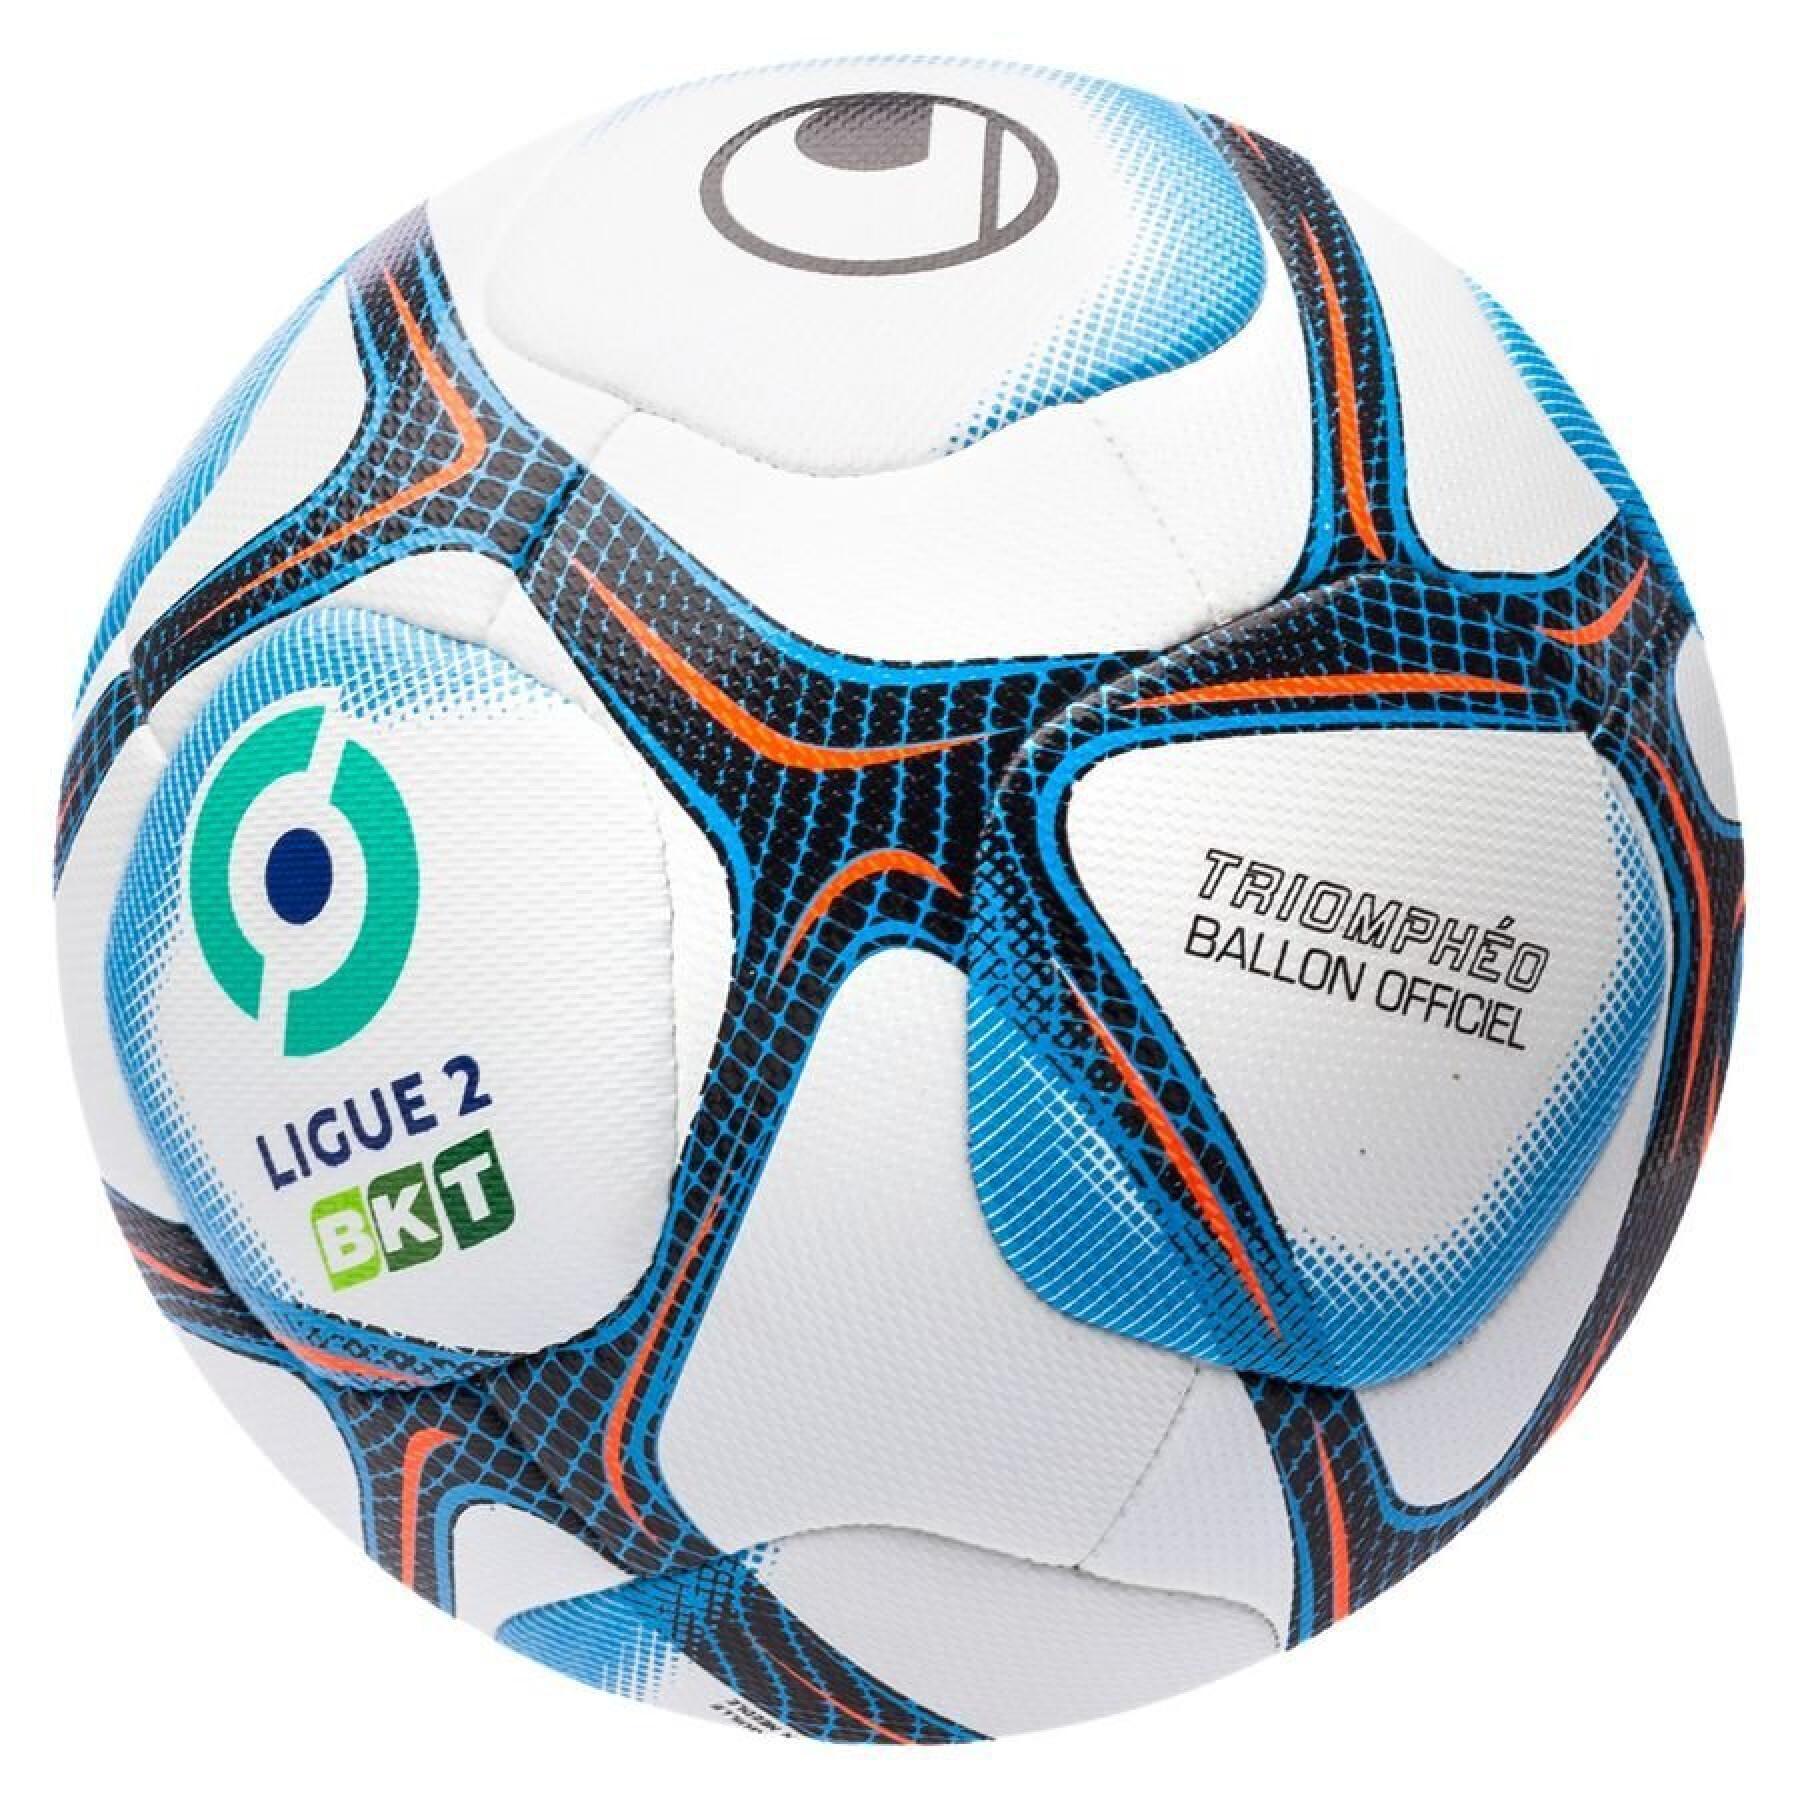 Official football Uhlsport Triomphéo 